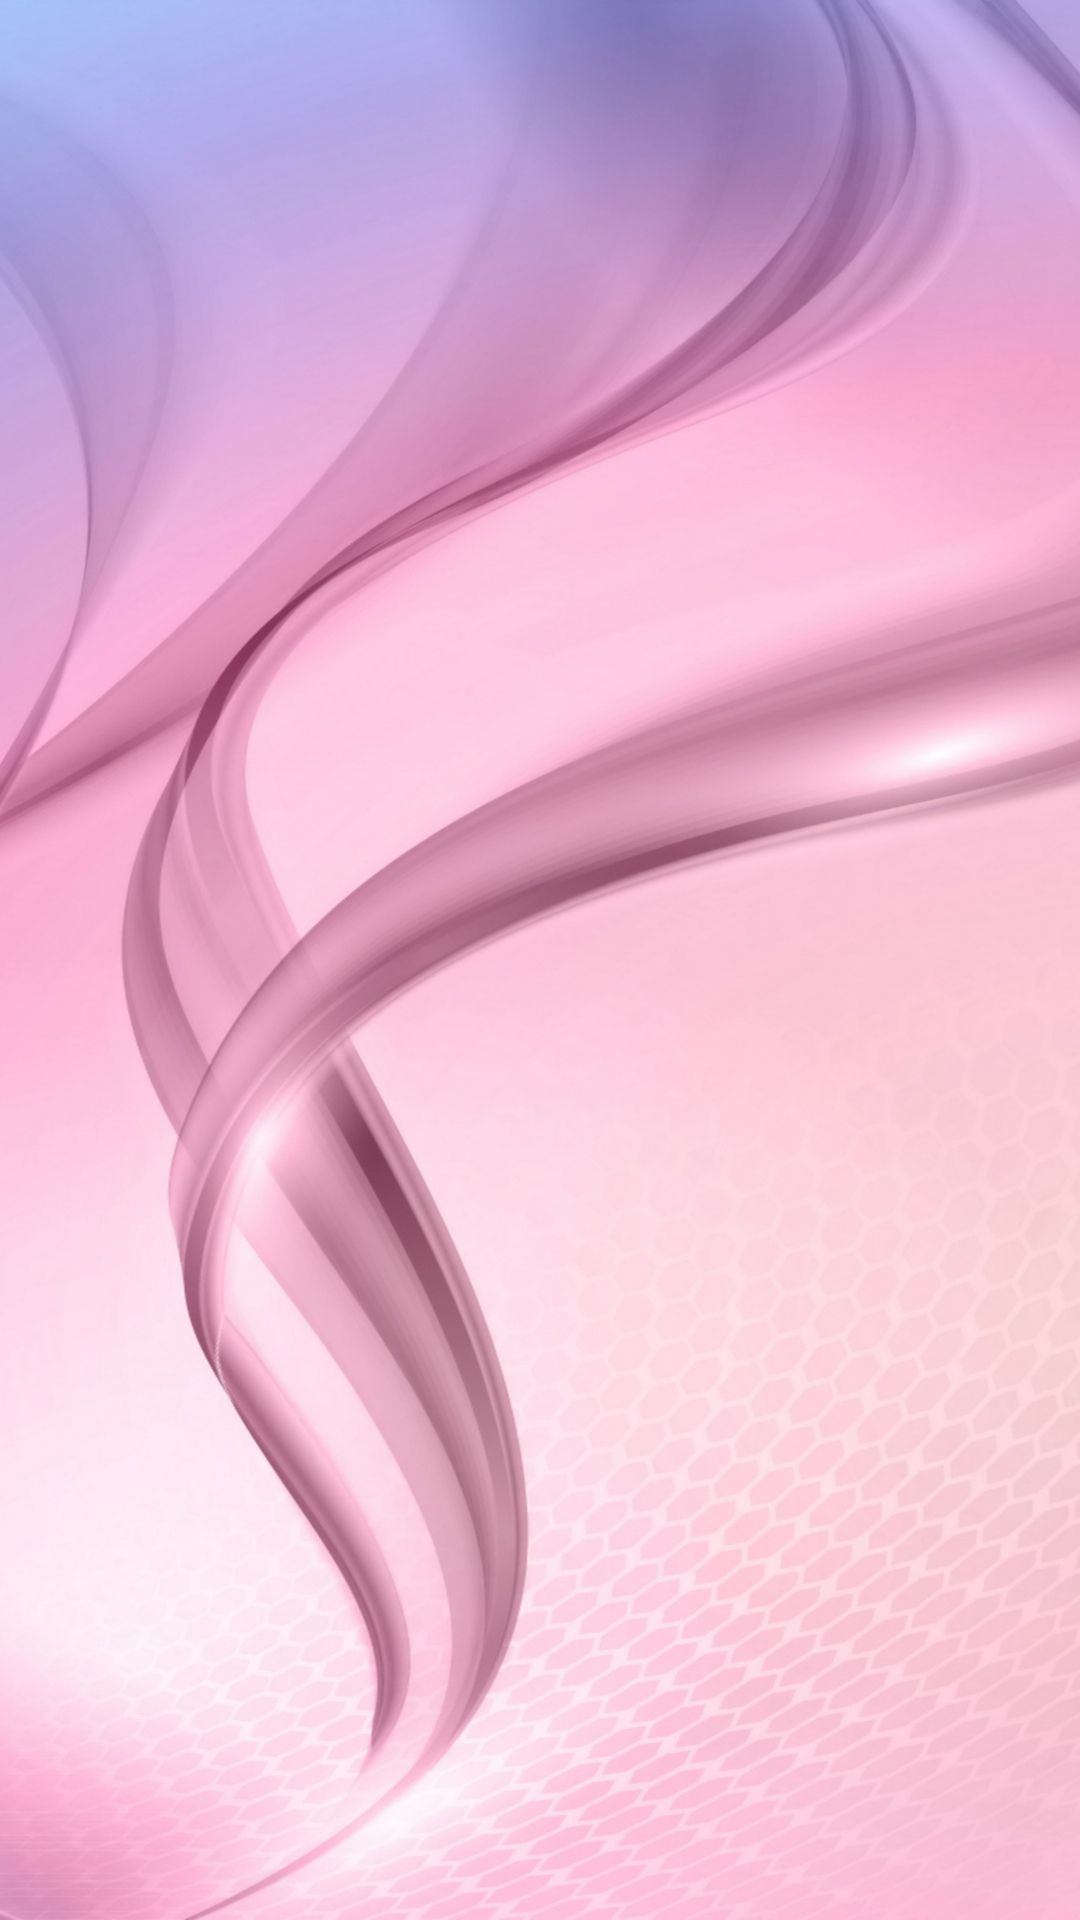 1080x1920 Pink and Lilac Wallpaper | Samsung wallpaper, Pretty phone wallpaper, Flower phone wallpaper